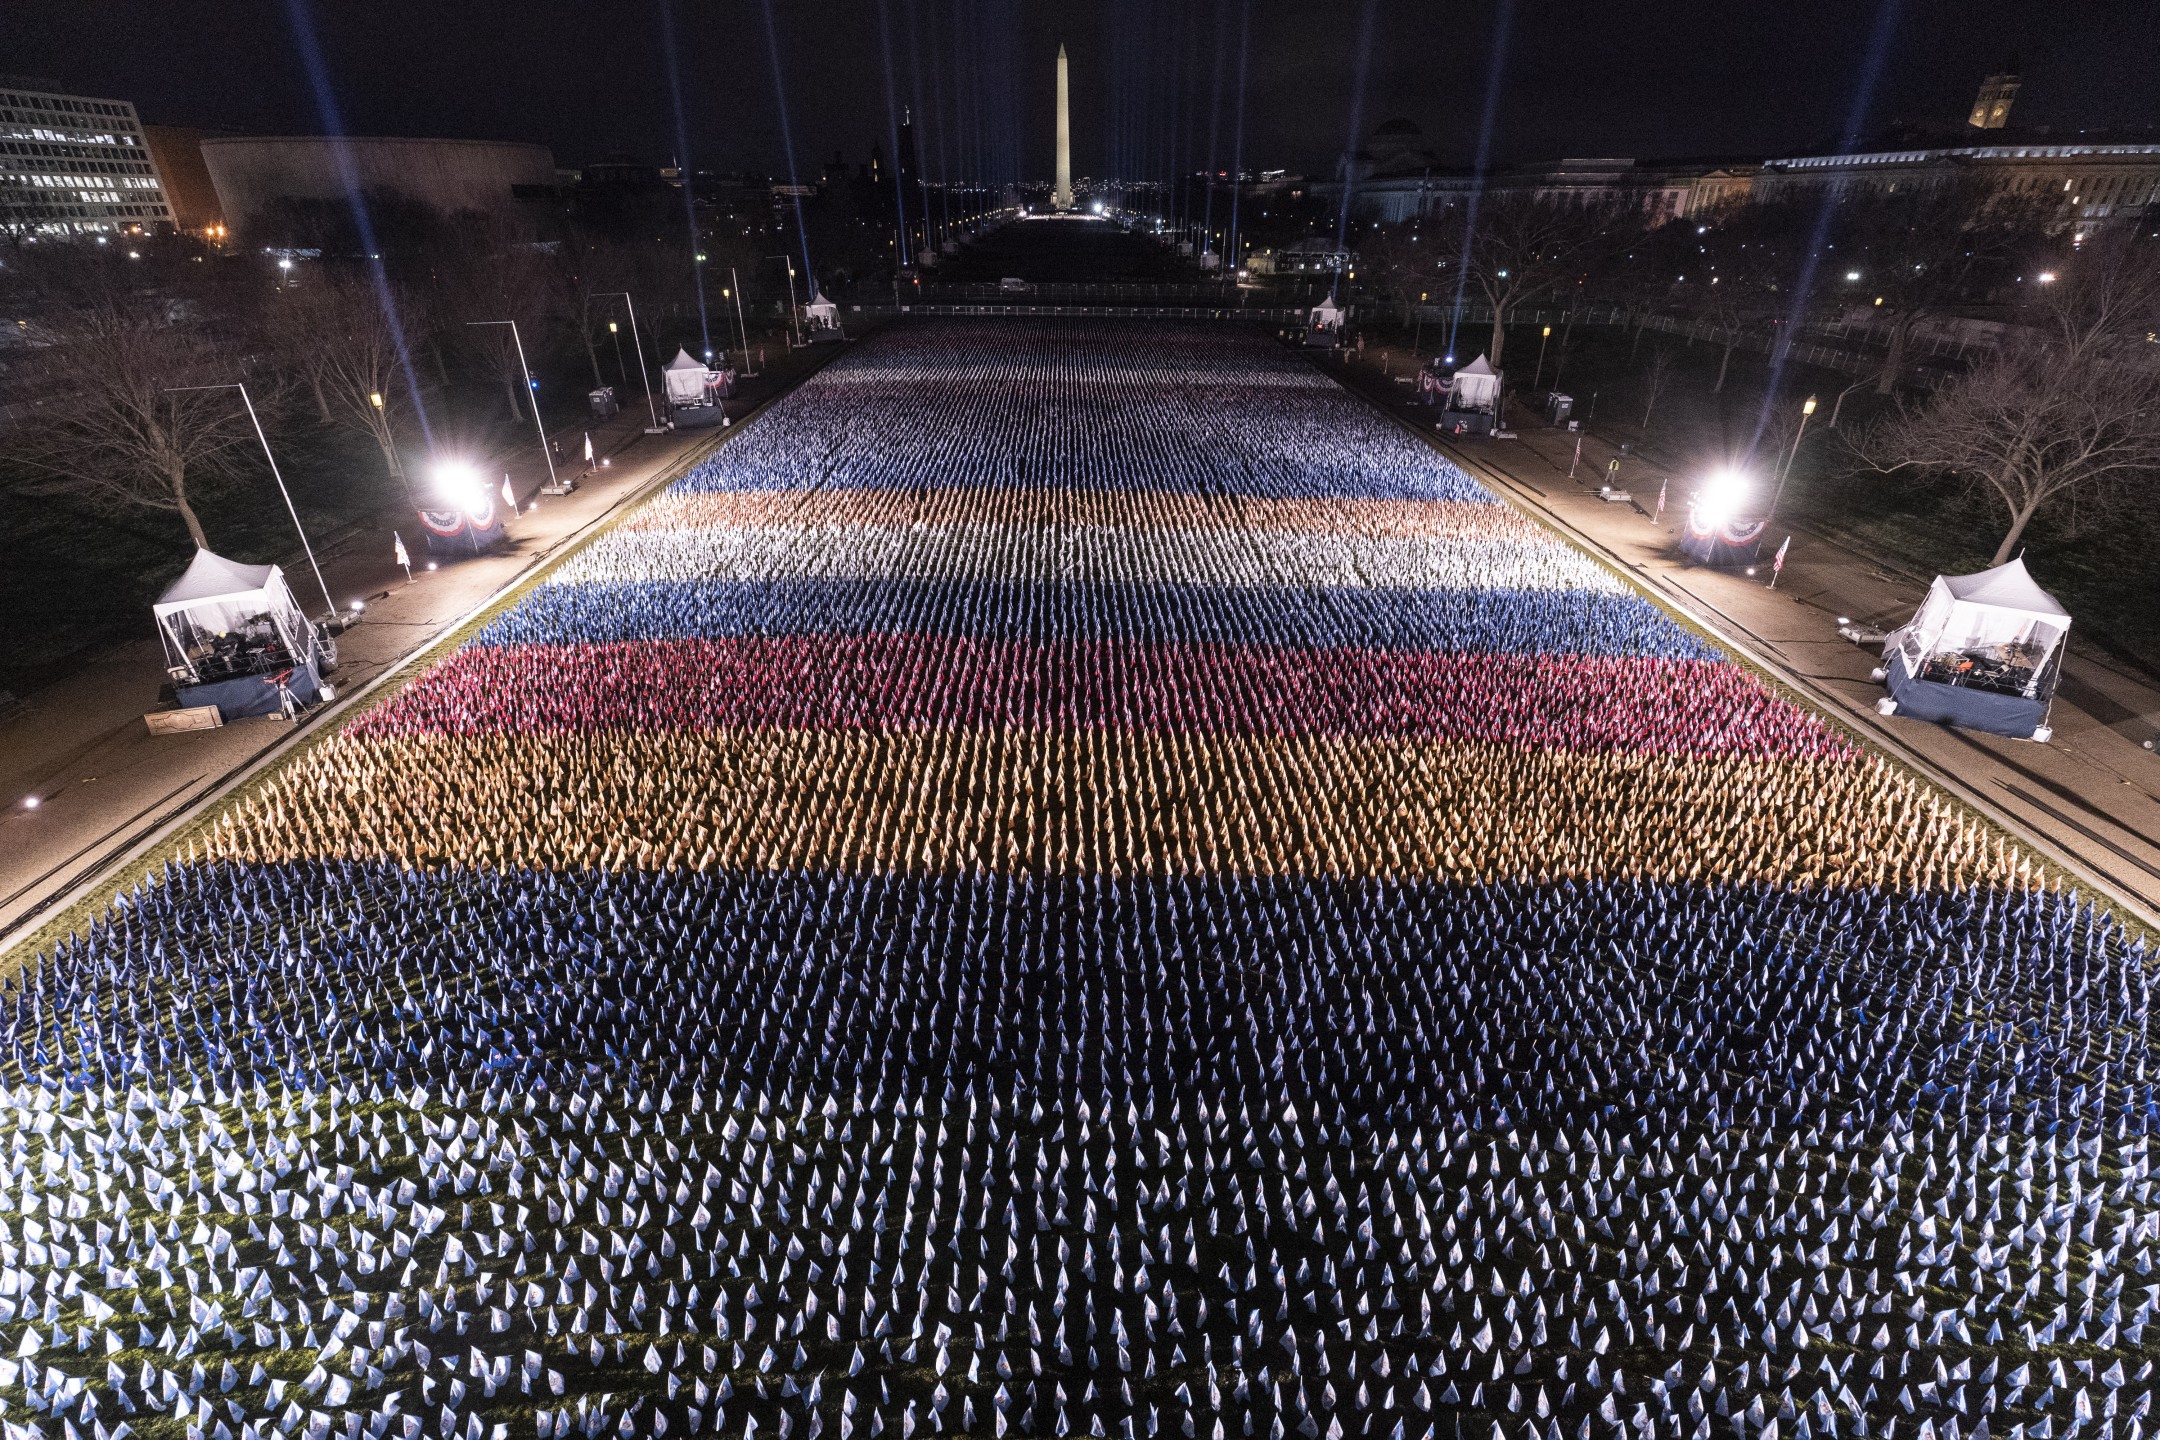 ‘Field of Flags’ on Display Ahead of Joe Biden’s Inauguration